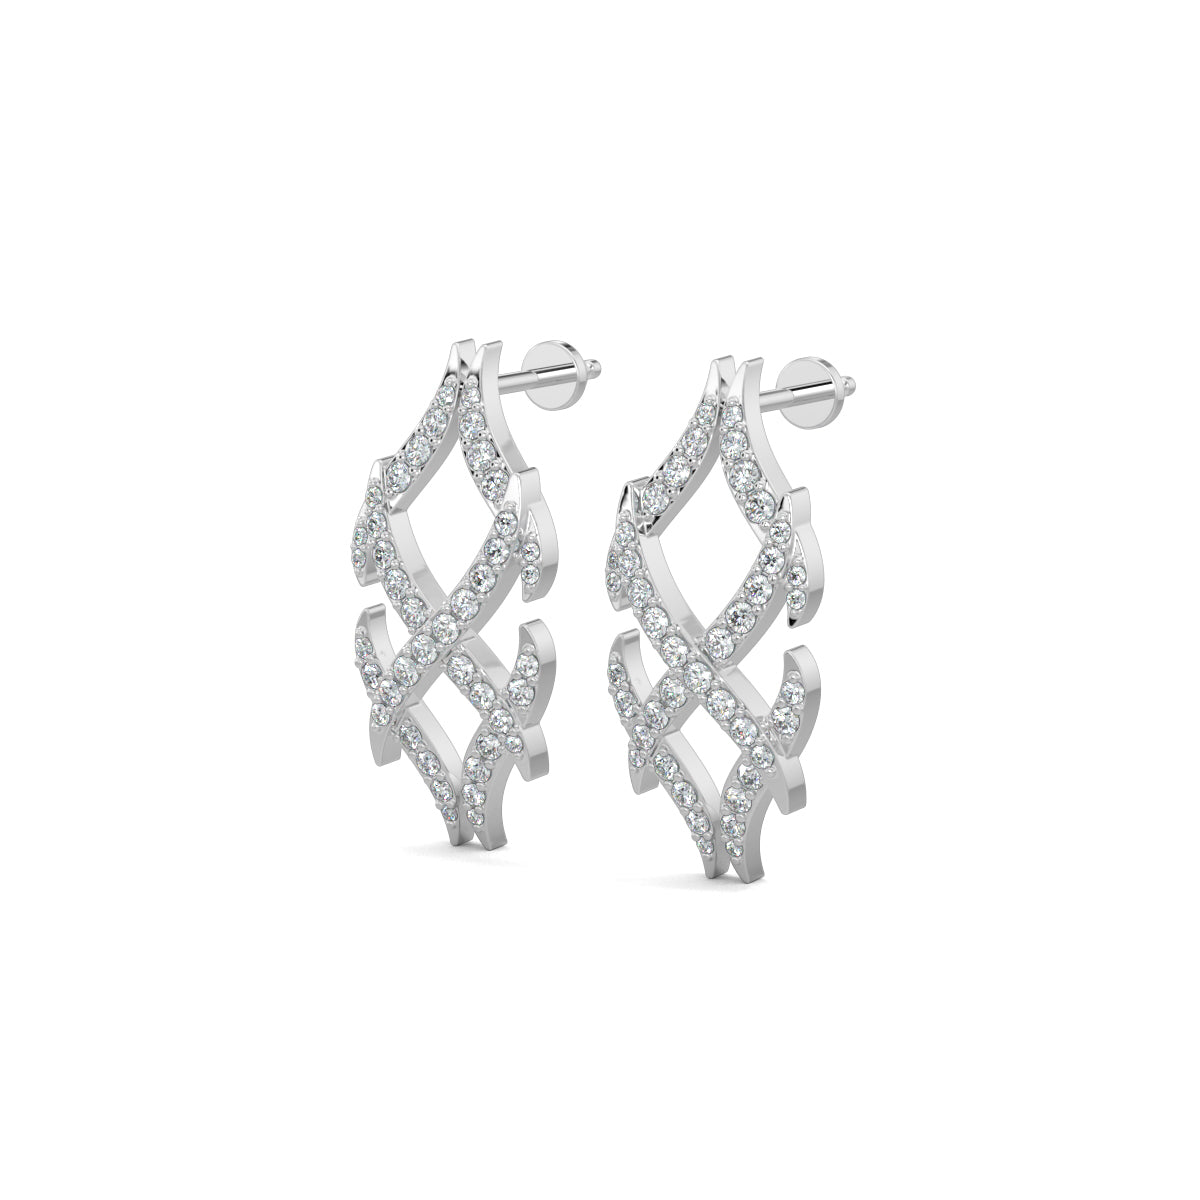 White Gold, Diamond Earrings, Italian-inspired diamond earrings, mid-length earrings, natural diamonds, lab-grown diamonds, Bella Luce Earrings, elegant jewelry, sophisticated earrings, Italian design inspired earrings.